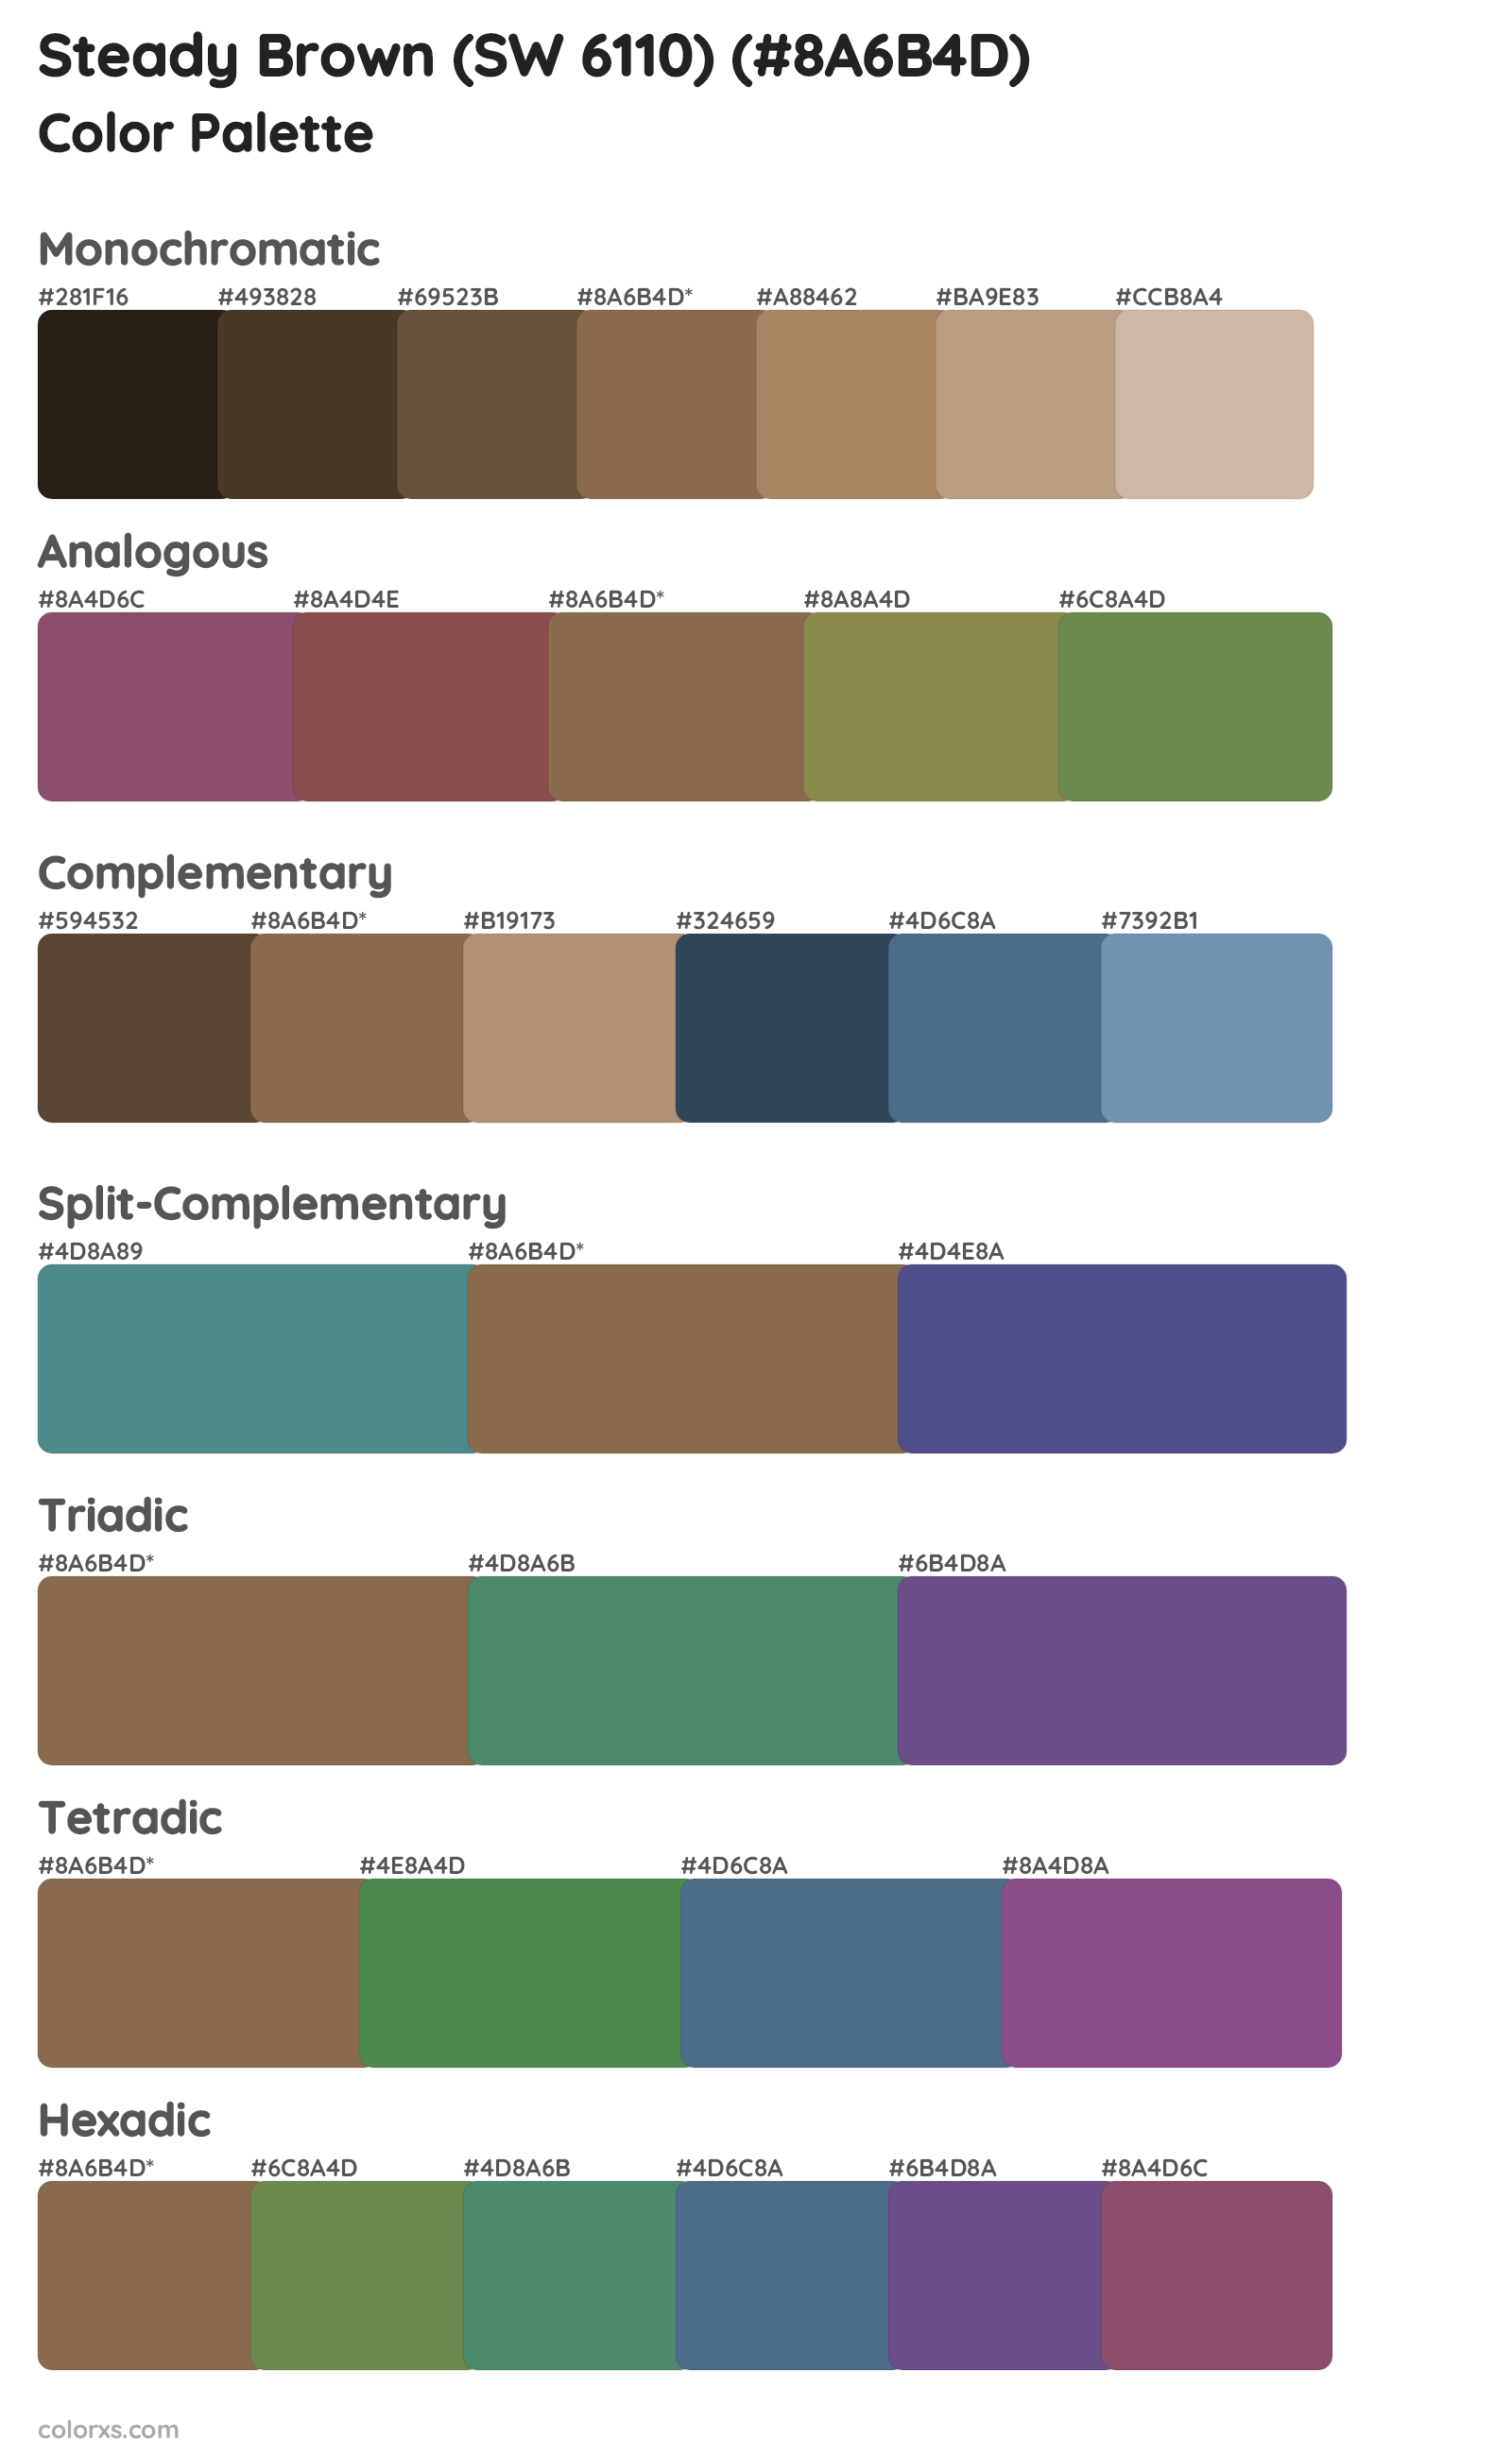 Steady Brown (SW 6110) Color Scheme Palettes